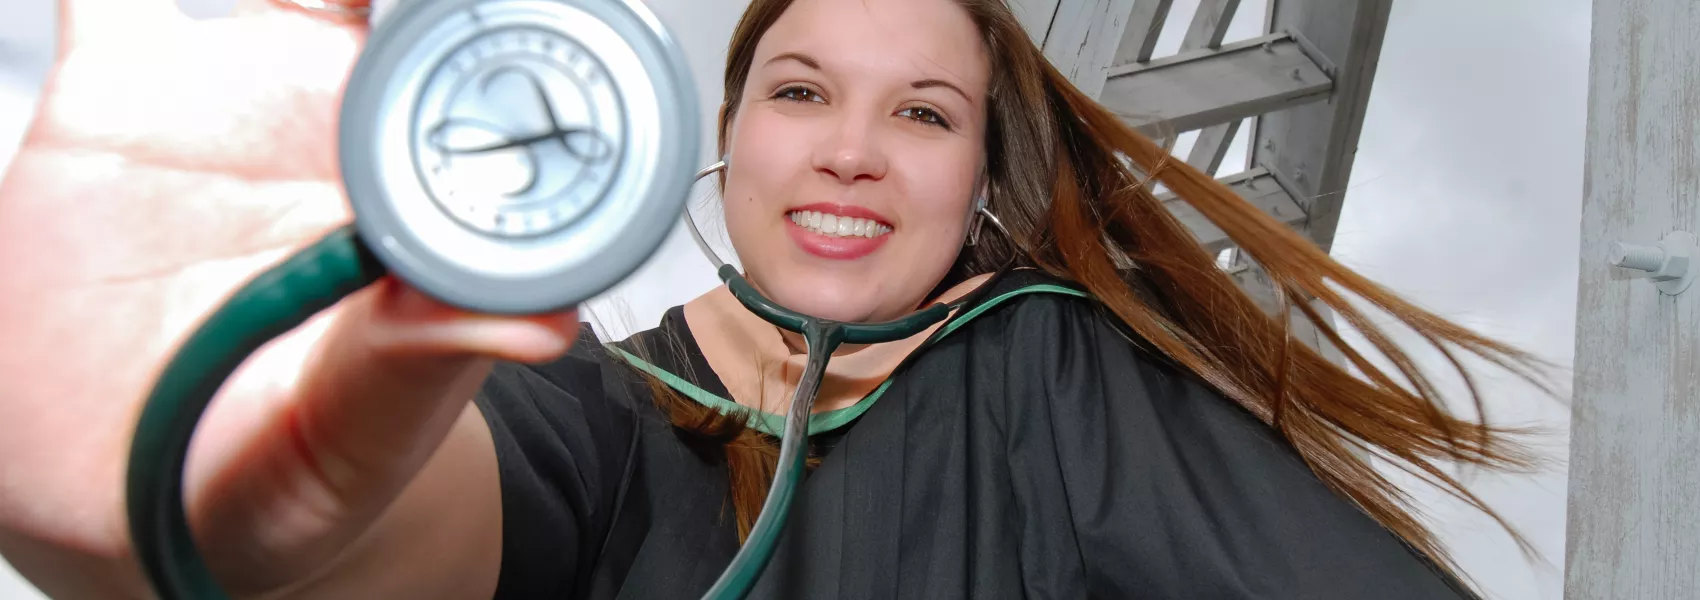 UNBC Nursing Student holding a stethoscope